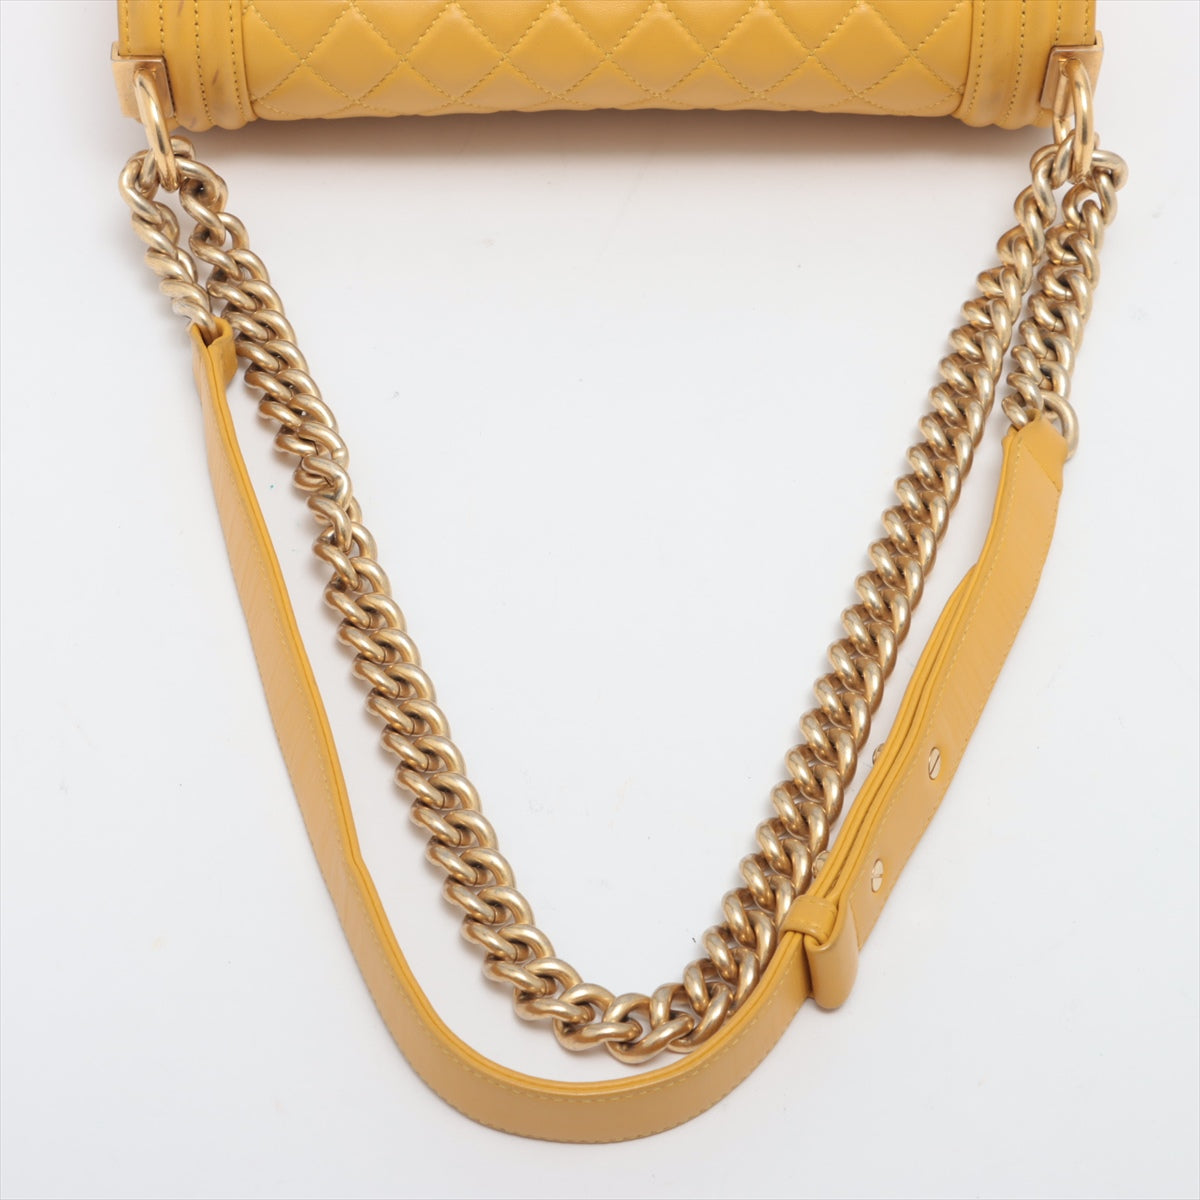 Chanel Boy Chanel Lambskin Chain shoulder bag Yellow gold Gold Metal fittings 21XXXXXX